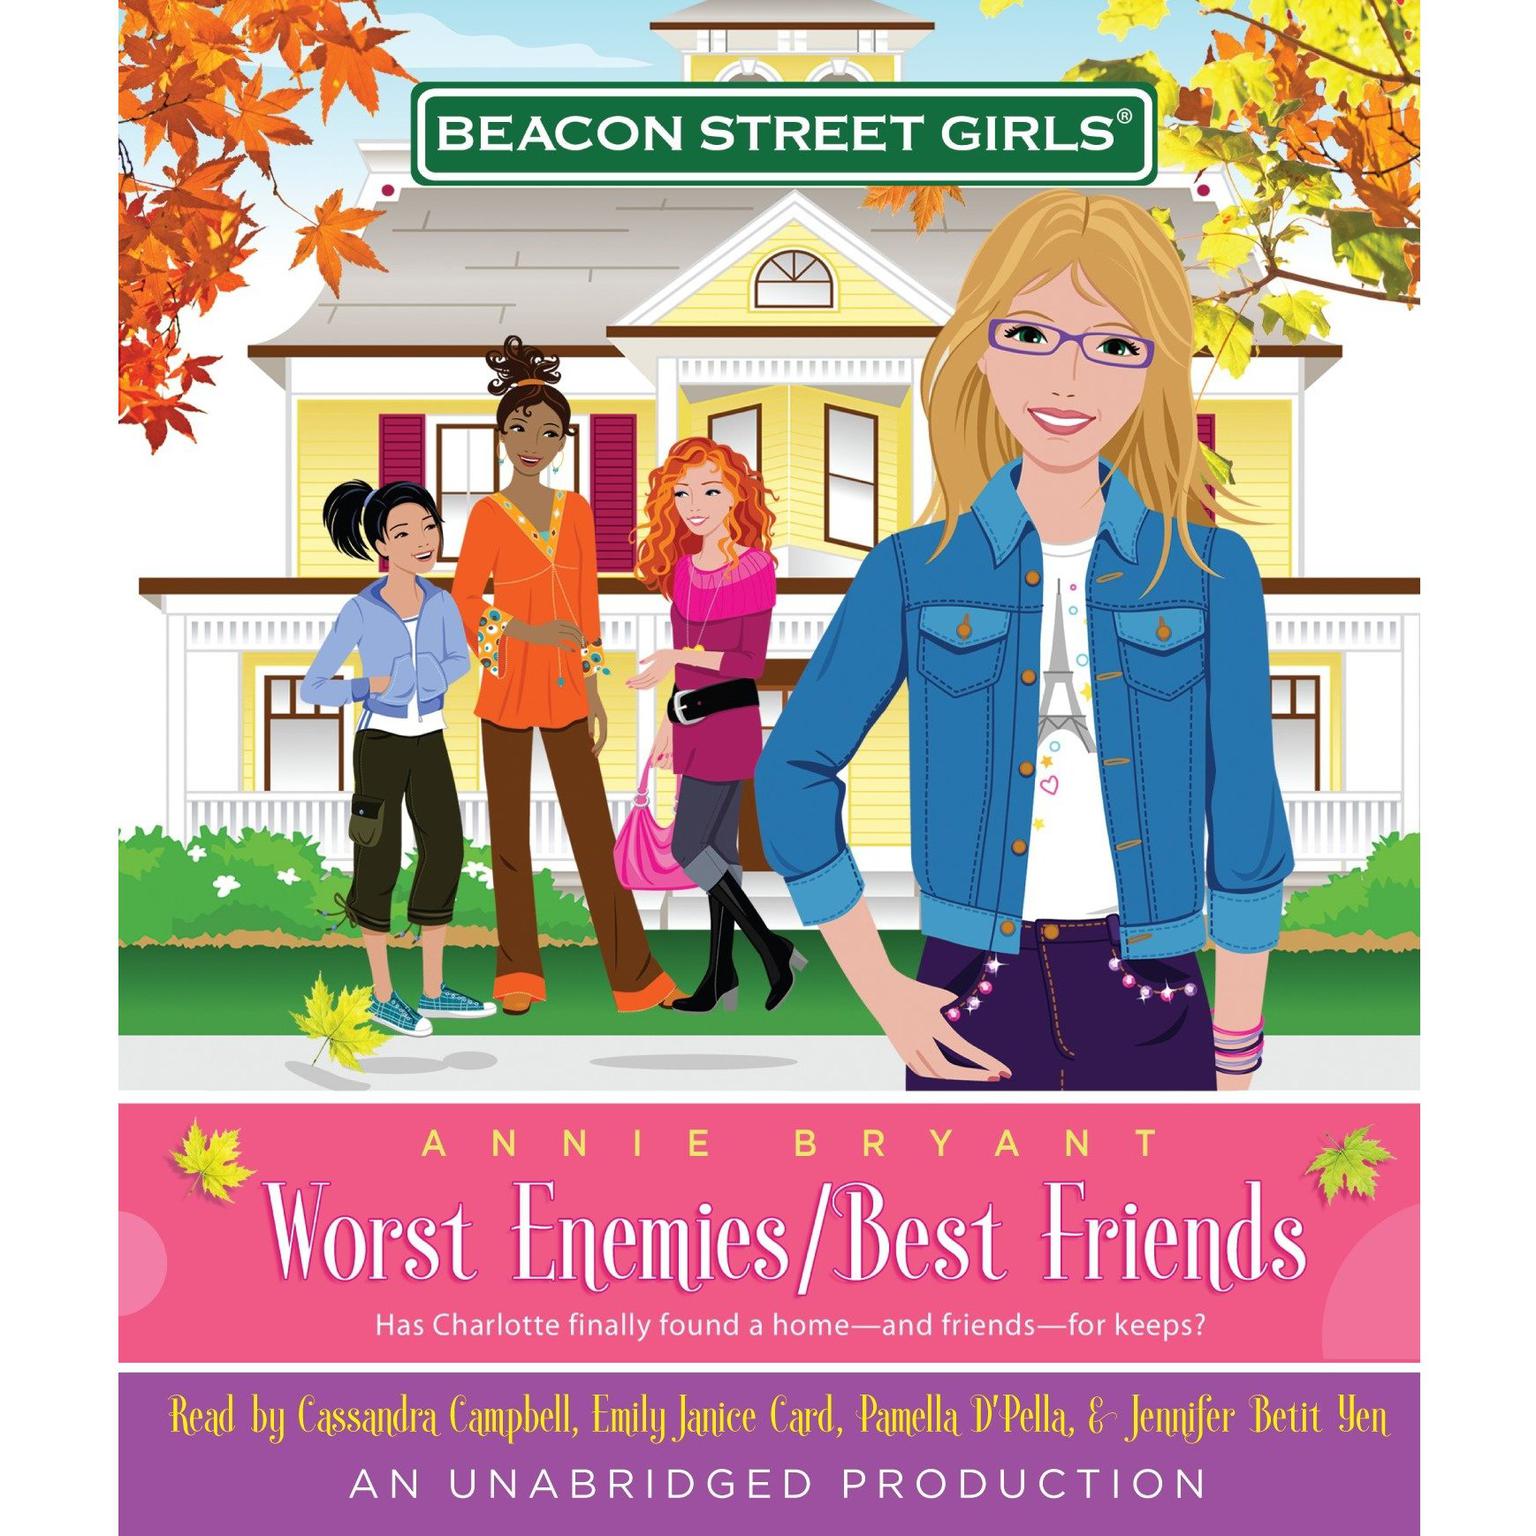 Beacon Street Girls #1: Worst Enemies/Best Friends Audiobook, by Annie Bryant